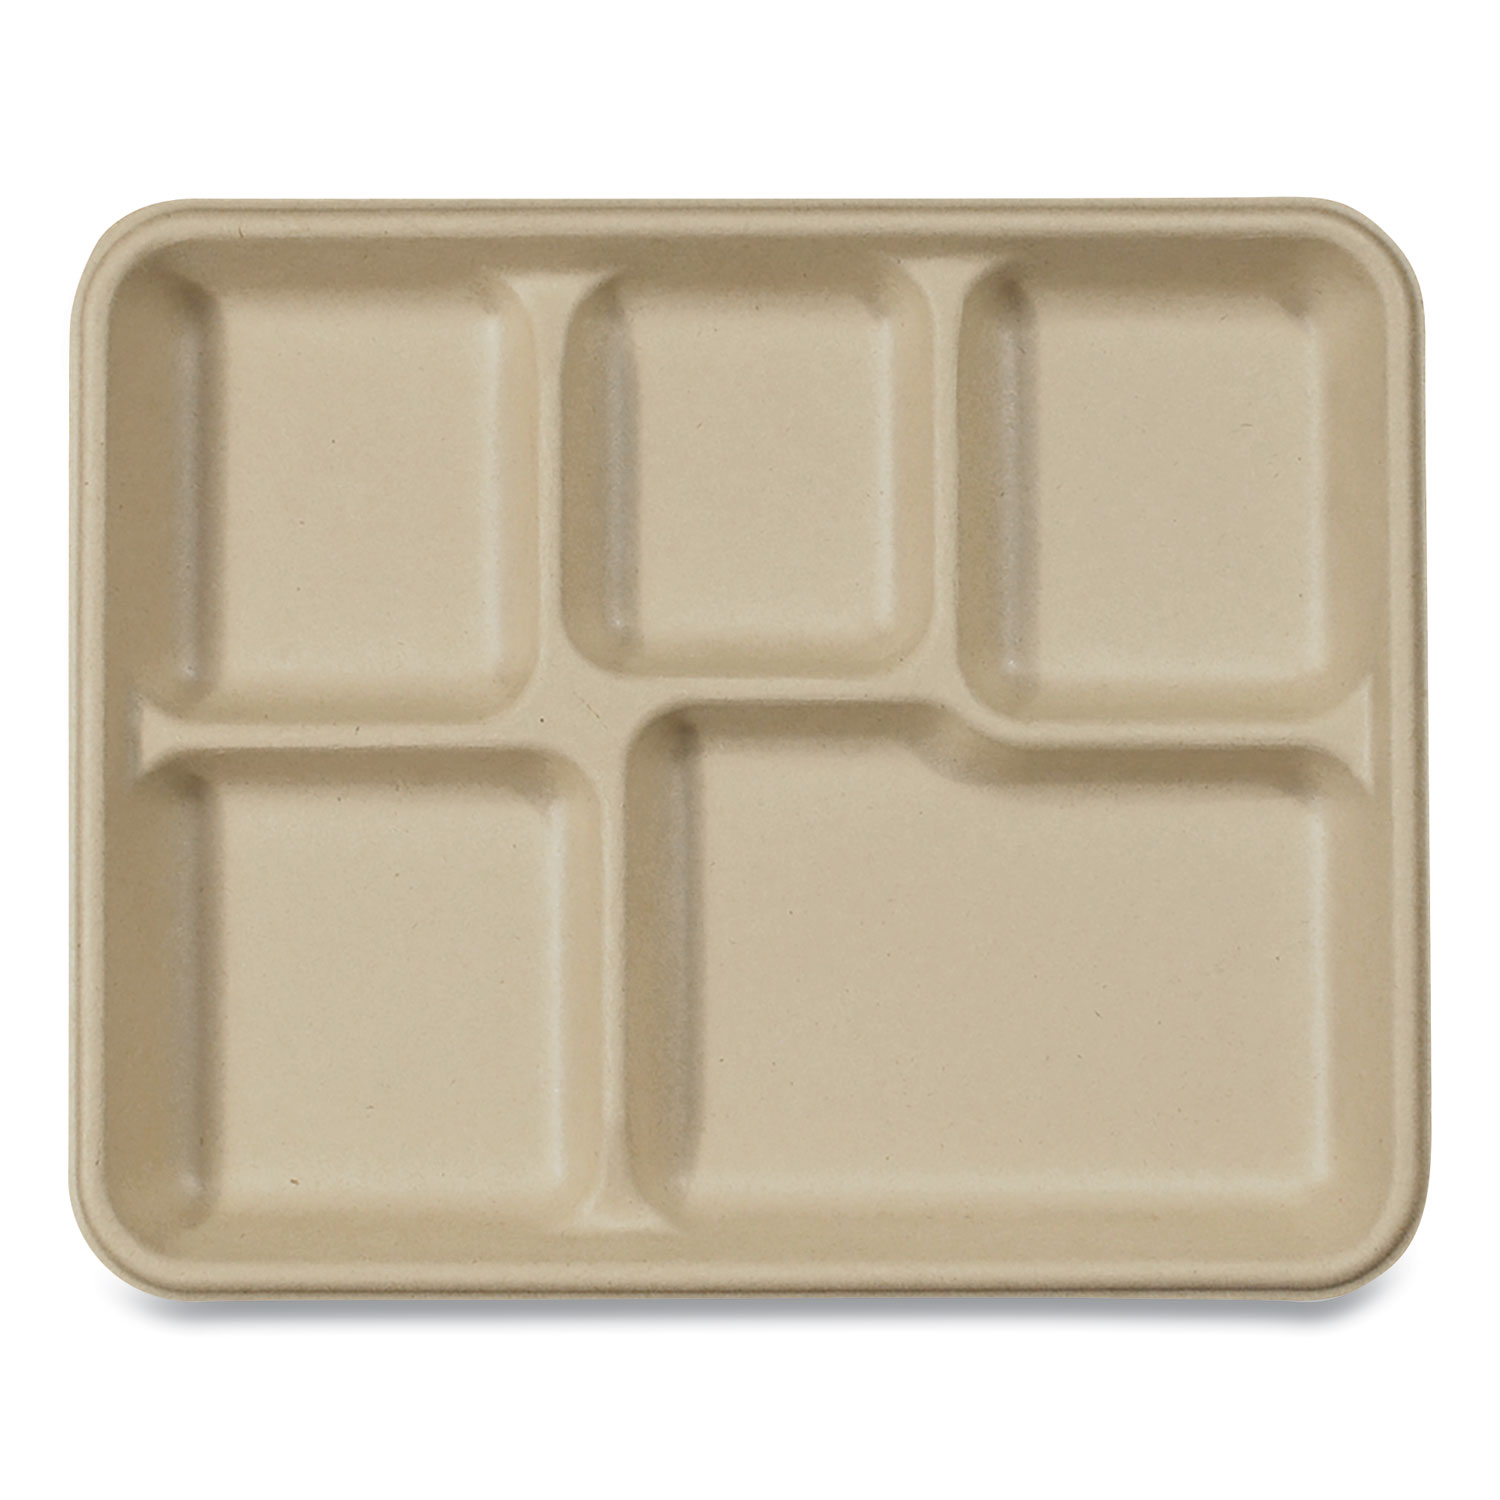 4550-W Rectangular Pocket Packaging Tray - 2.75 x 0.75 x 0.75